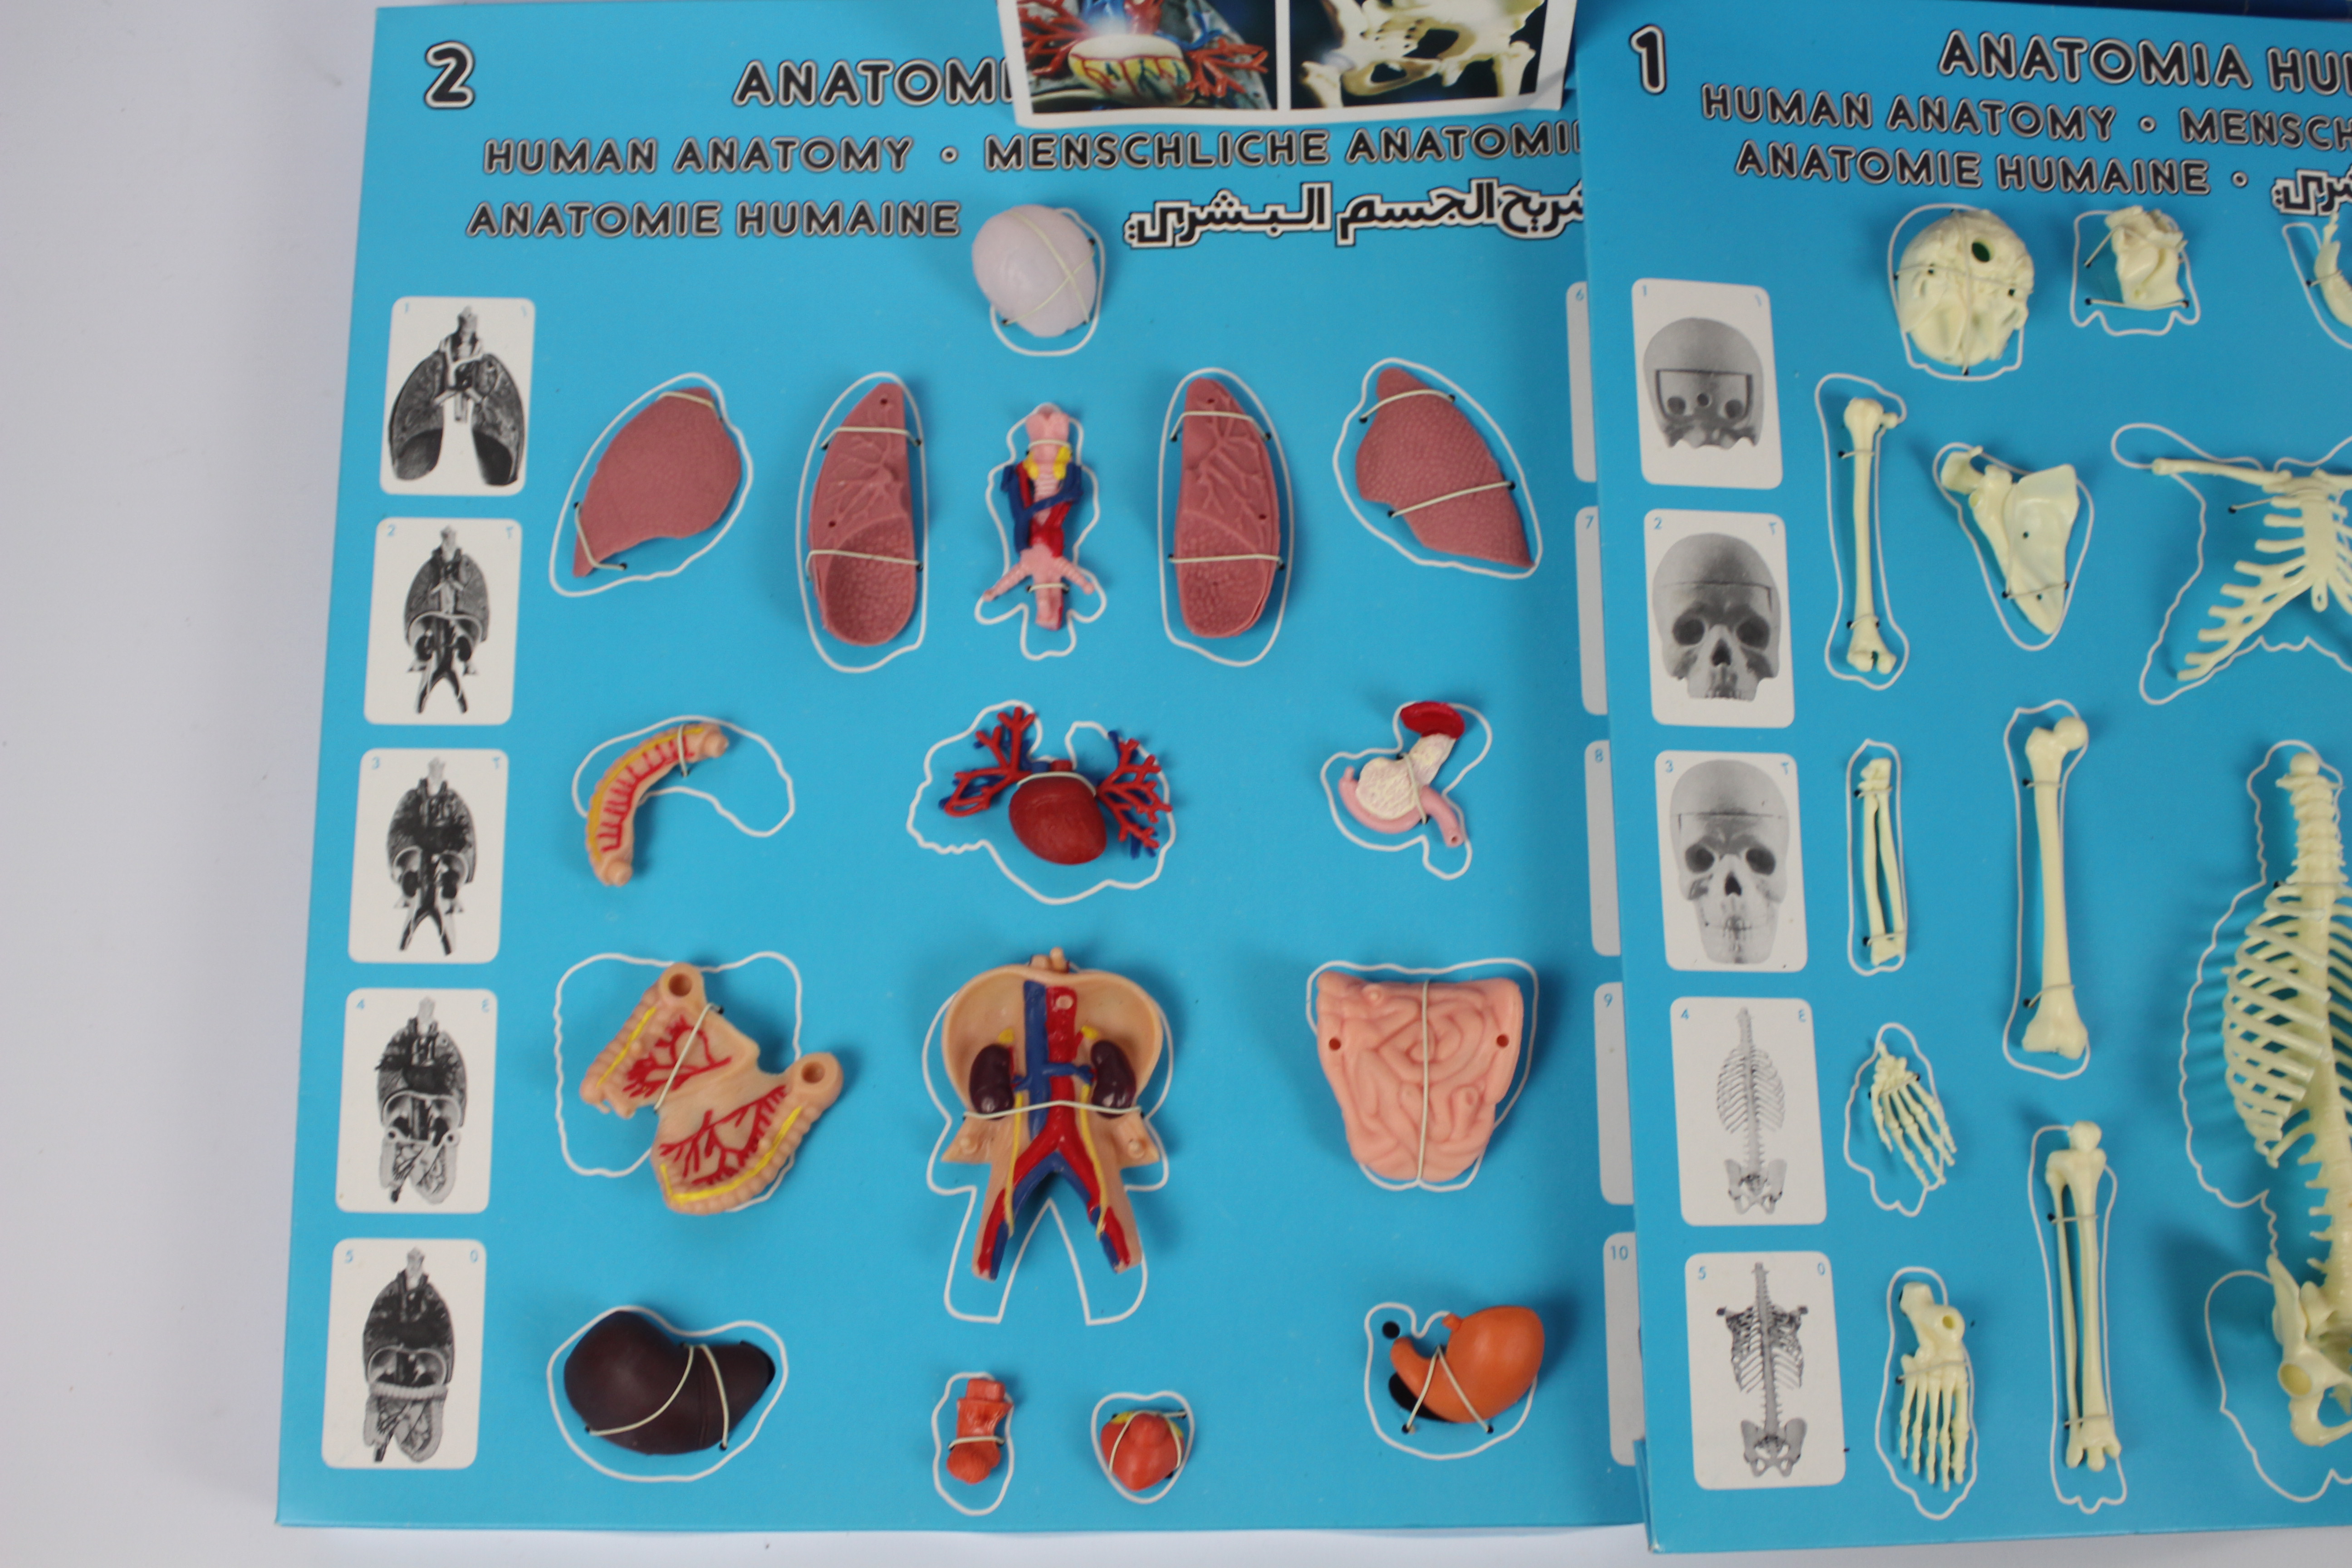 Human Anatomy - Anatomia Humania by Serima. A rare Spanish plastic 1:5 scale, human anatomy model. - Image 2 of 5